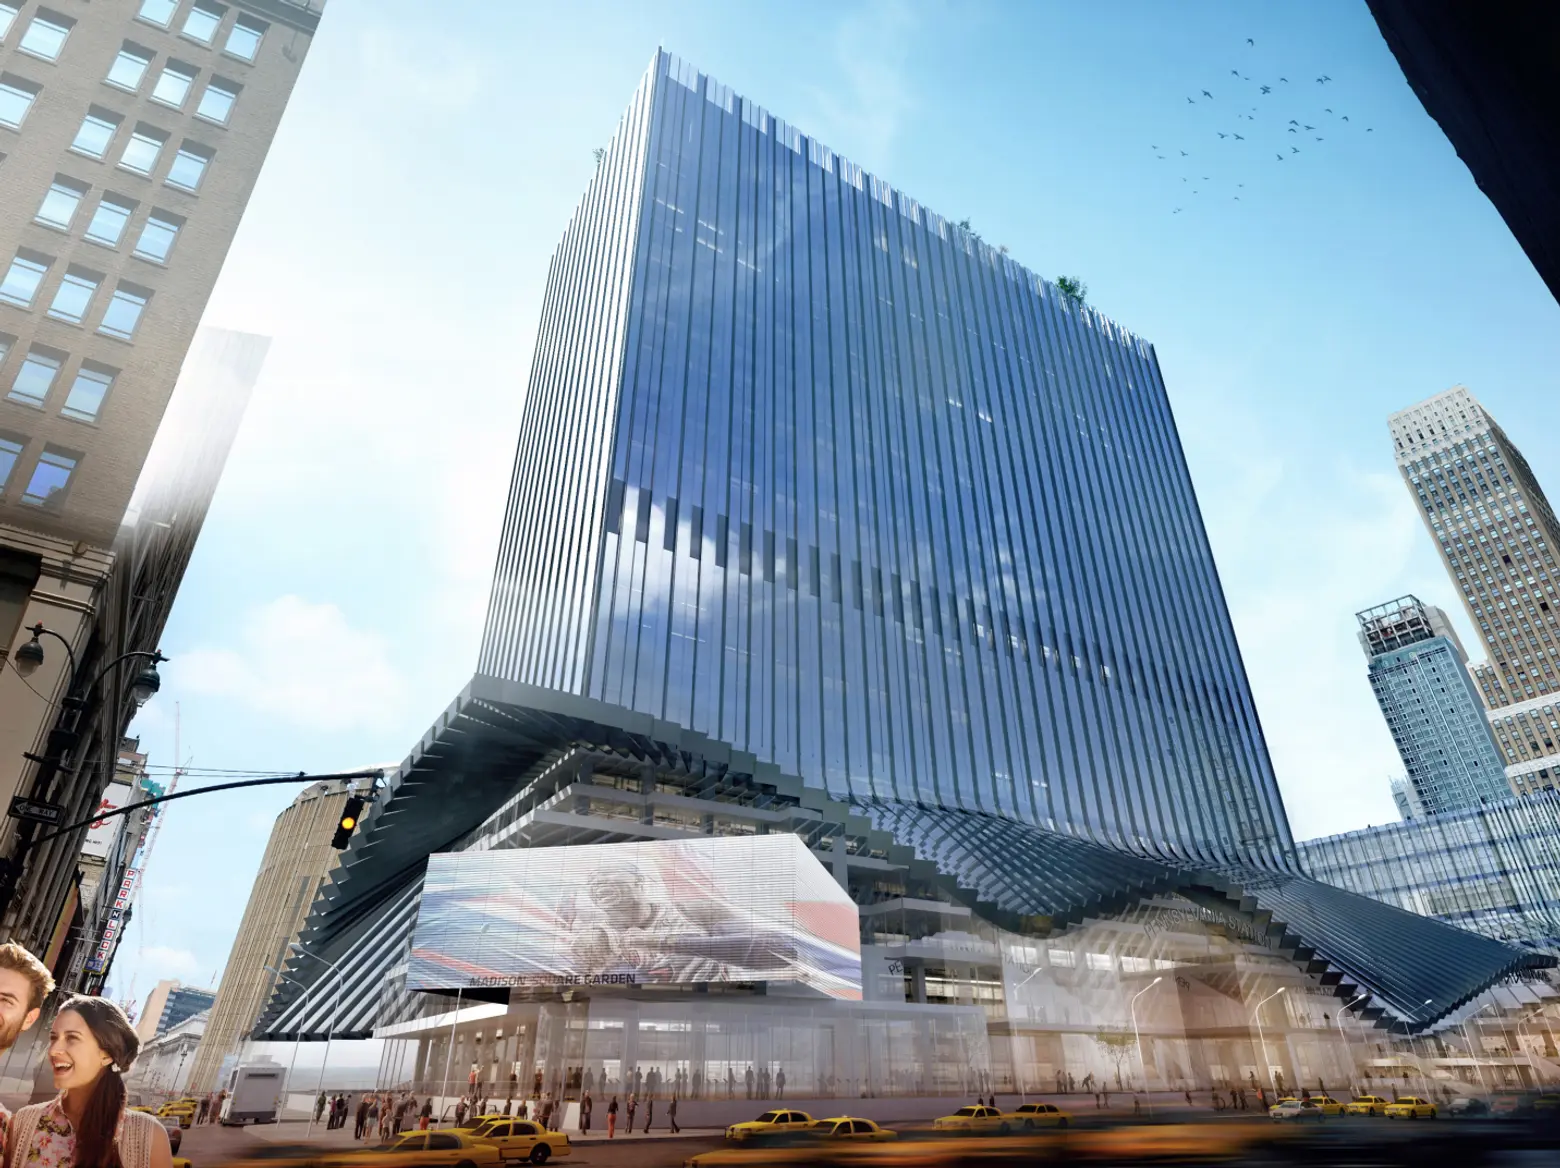 Vornado likely to keep Bjarke Ingels’ wave-like canopy design for 2 Penn Plaza overhaul